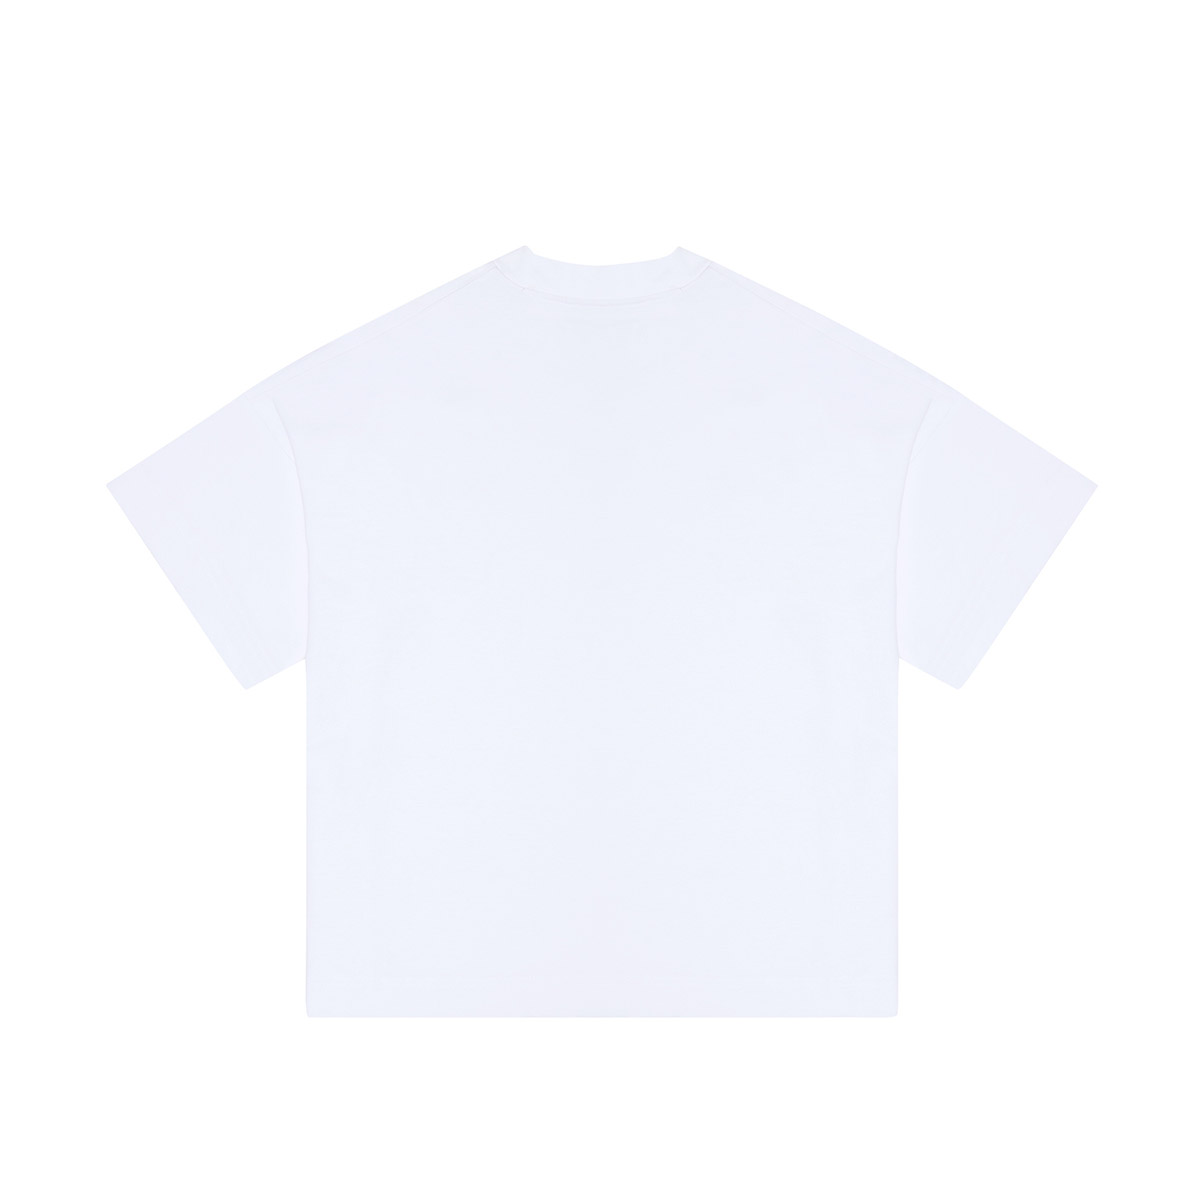 oalc SYMBOL OVER-FIT T-SHIRT 심볼 오버핏 티셔츠 (WHITE)